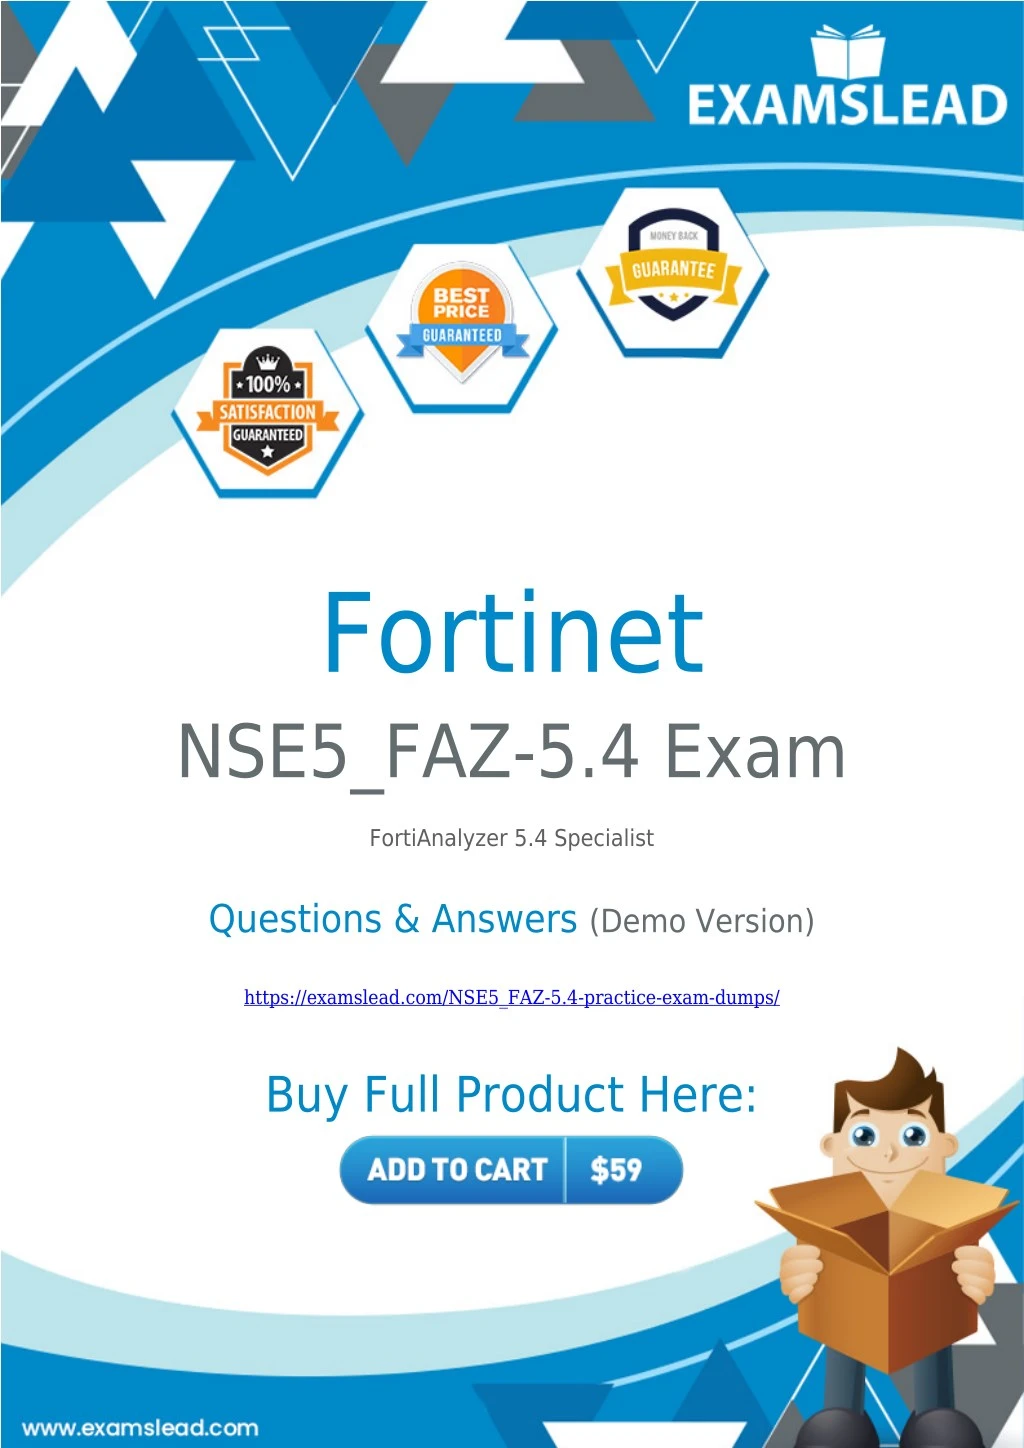 fortinet nse5 faz 5 4 exam